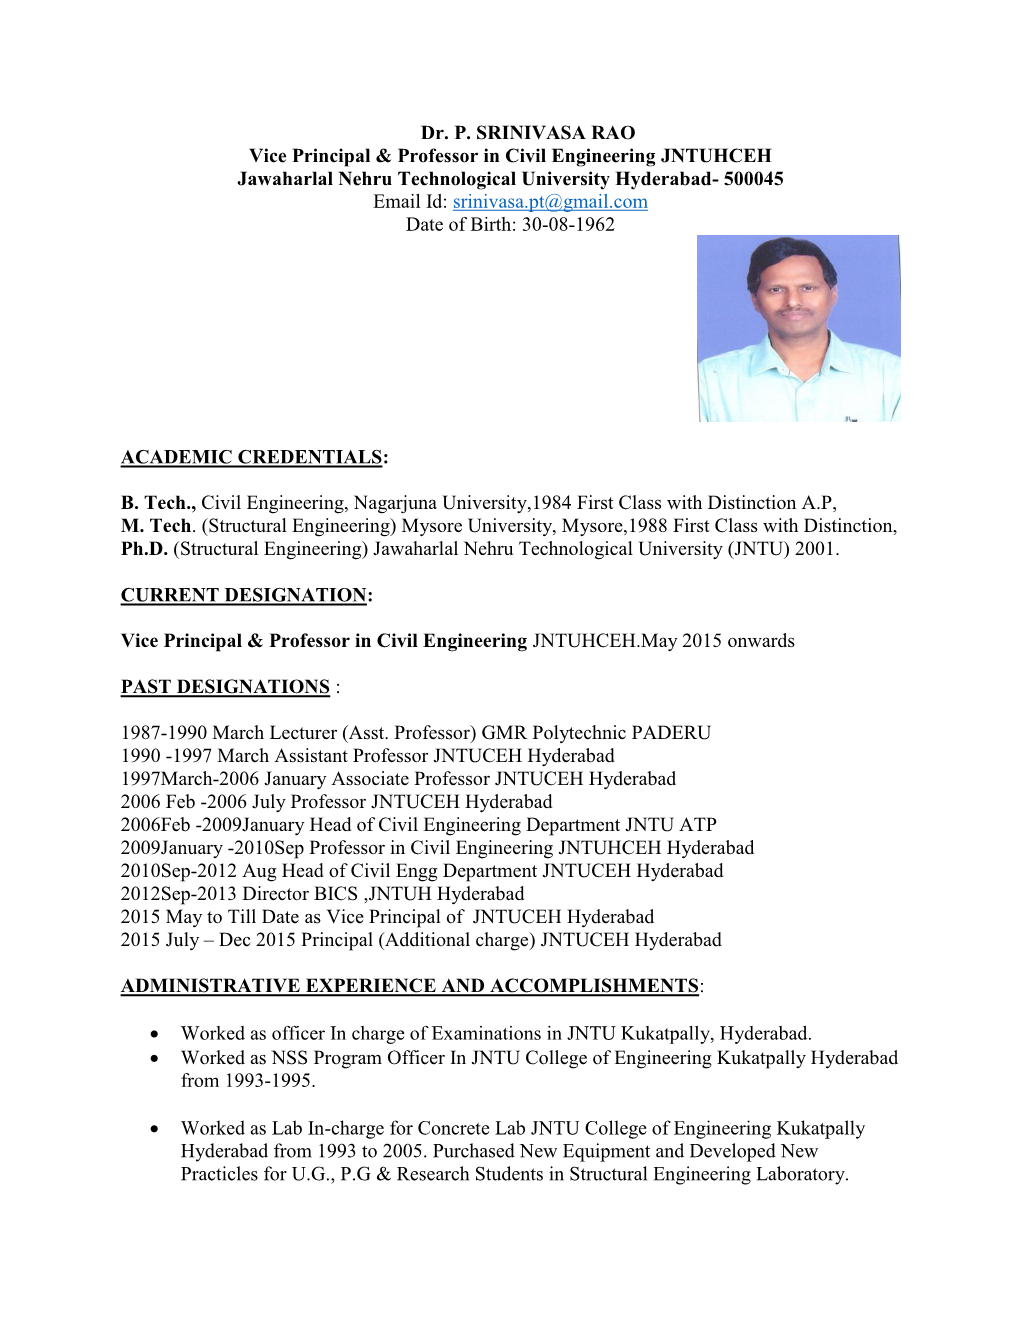 Dr. P. SRINIVASA RAO Vice Principal & Professor in Civil Engineering